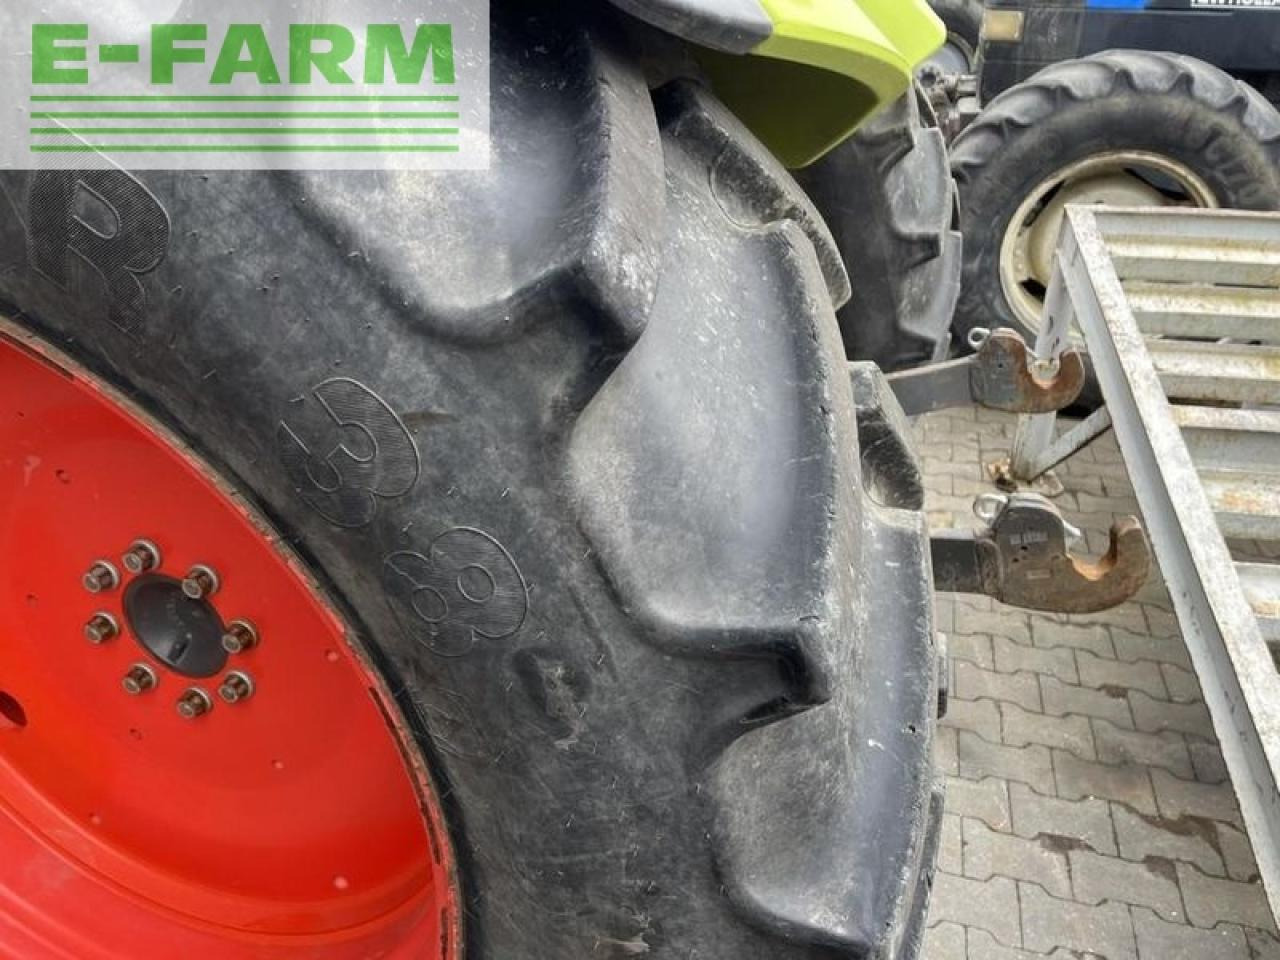 Farm tractor CLAAS arion 420 cis + claas fl100